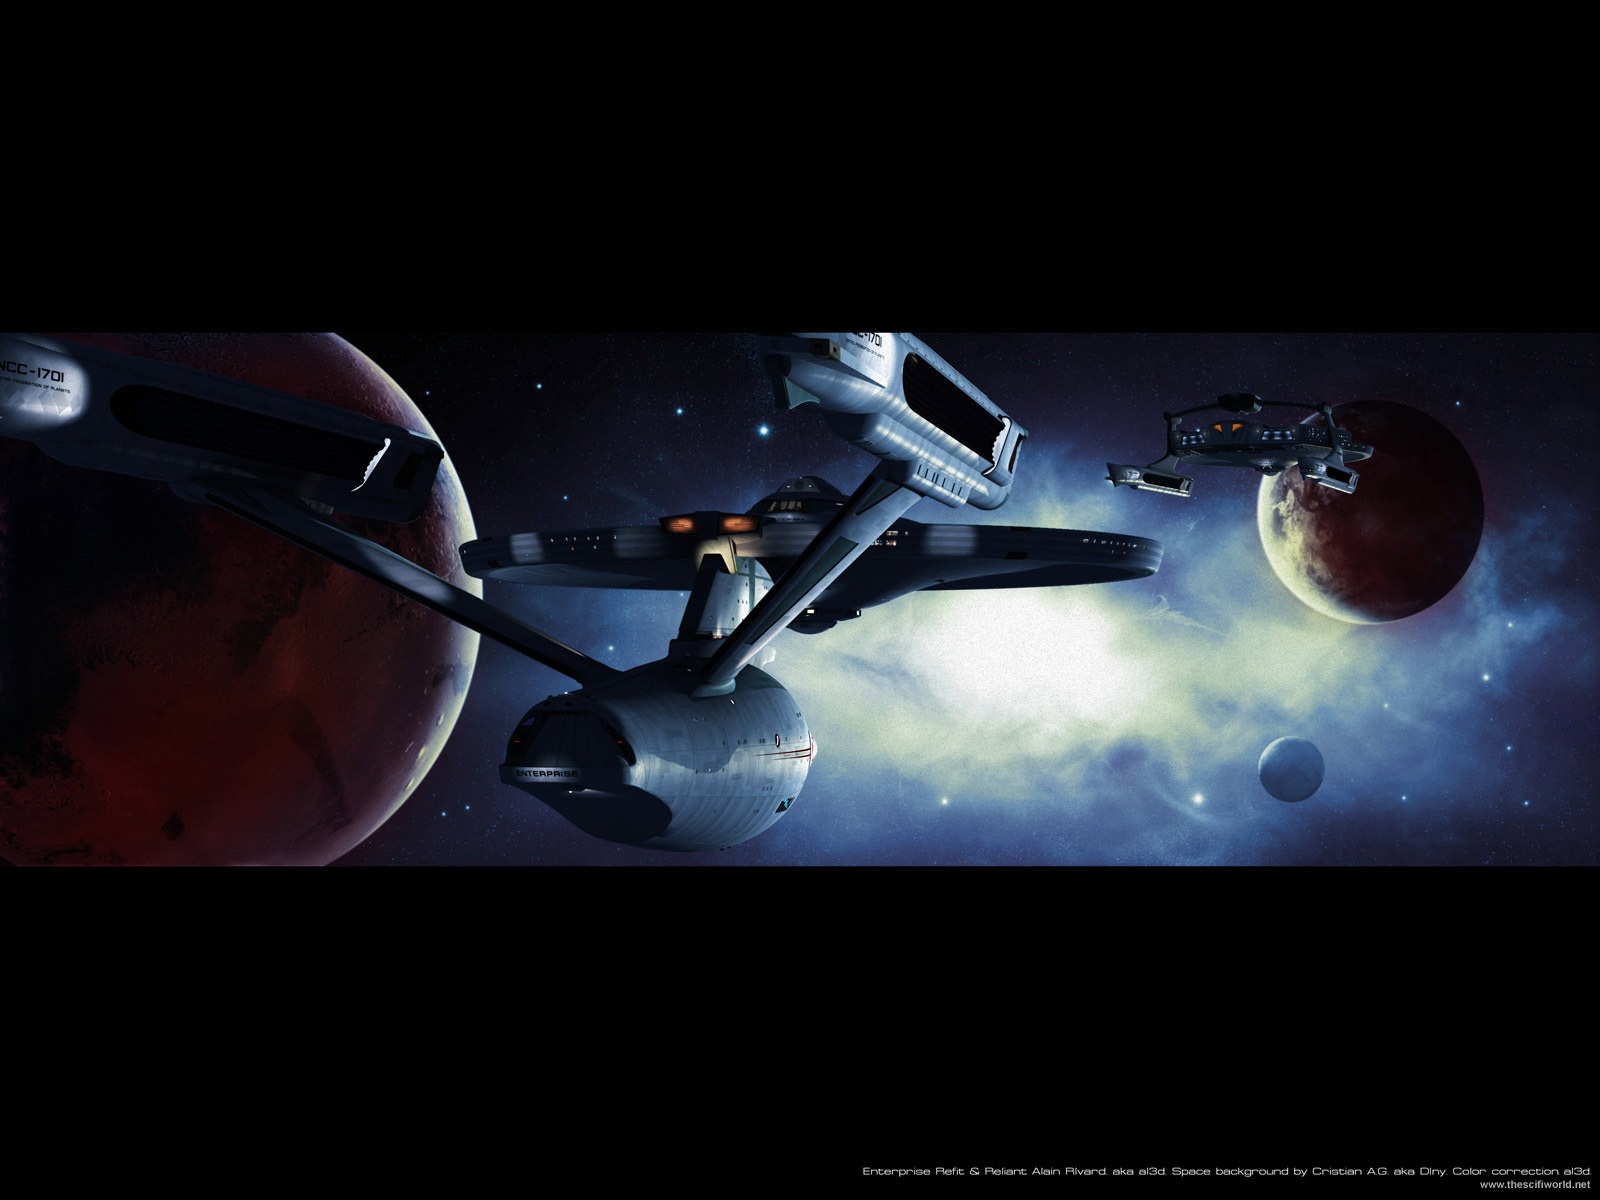 Patrol Star Trek Puter Desktop Wallpaper Pictures Image